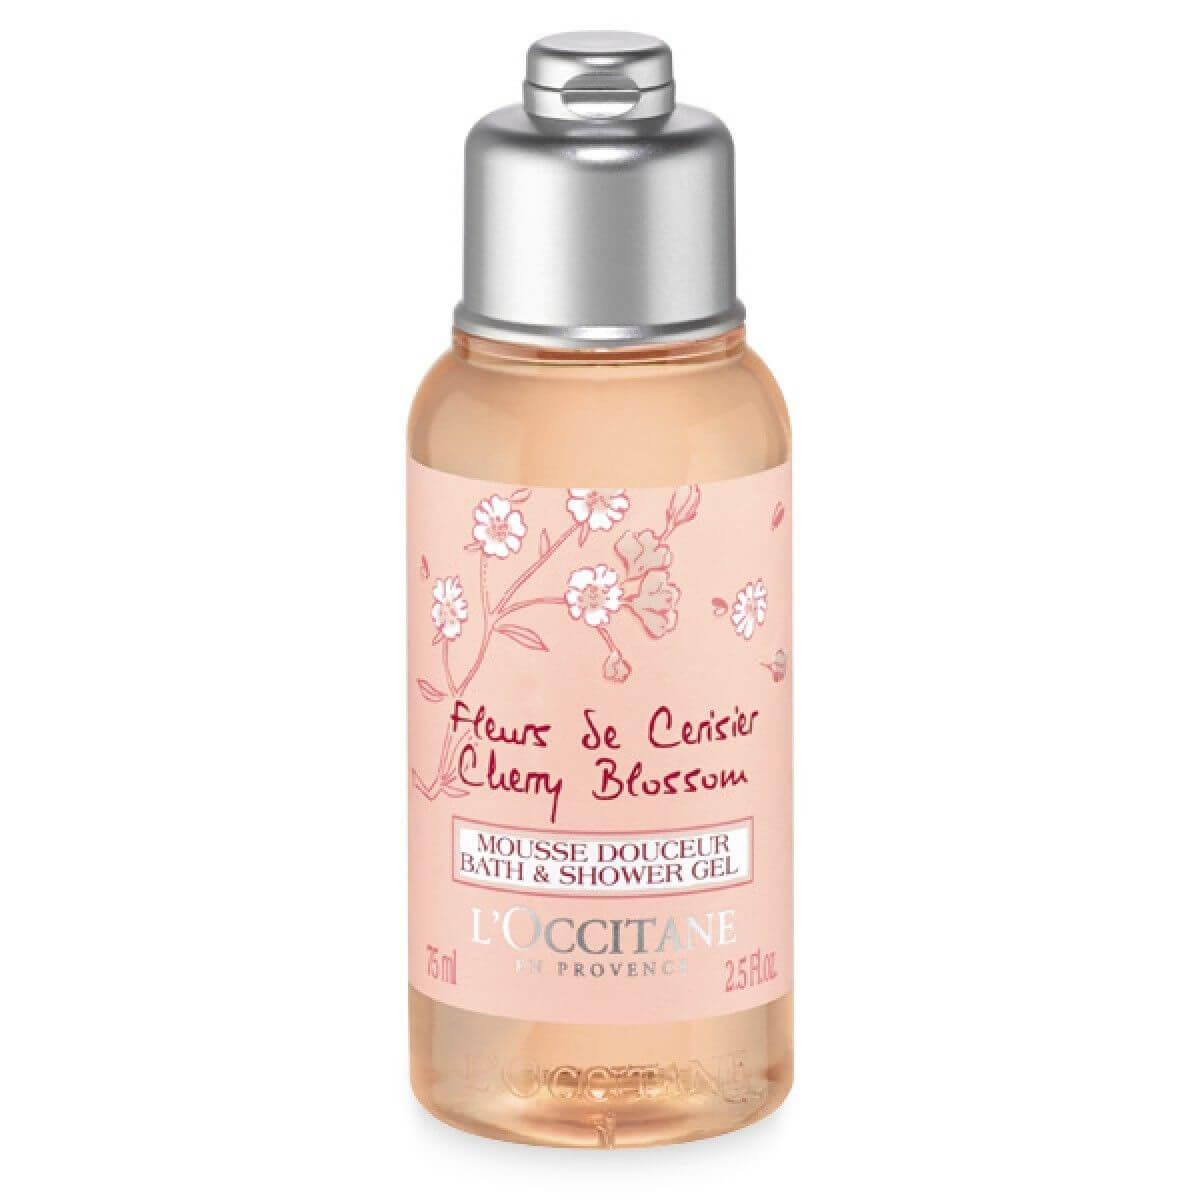 L'Occitane , Cherry Blossom ,  Douceur BCherry Blossom Mousse ath & Shower Gel , เจลอาบน้ำ , เจลอาบน้ำกลิ่นหอม